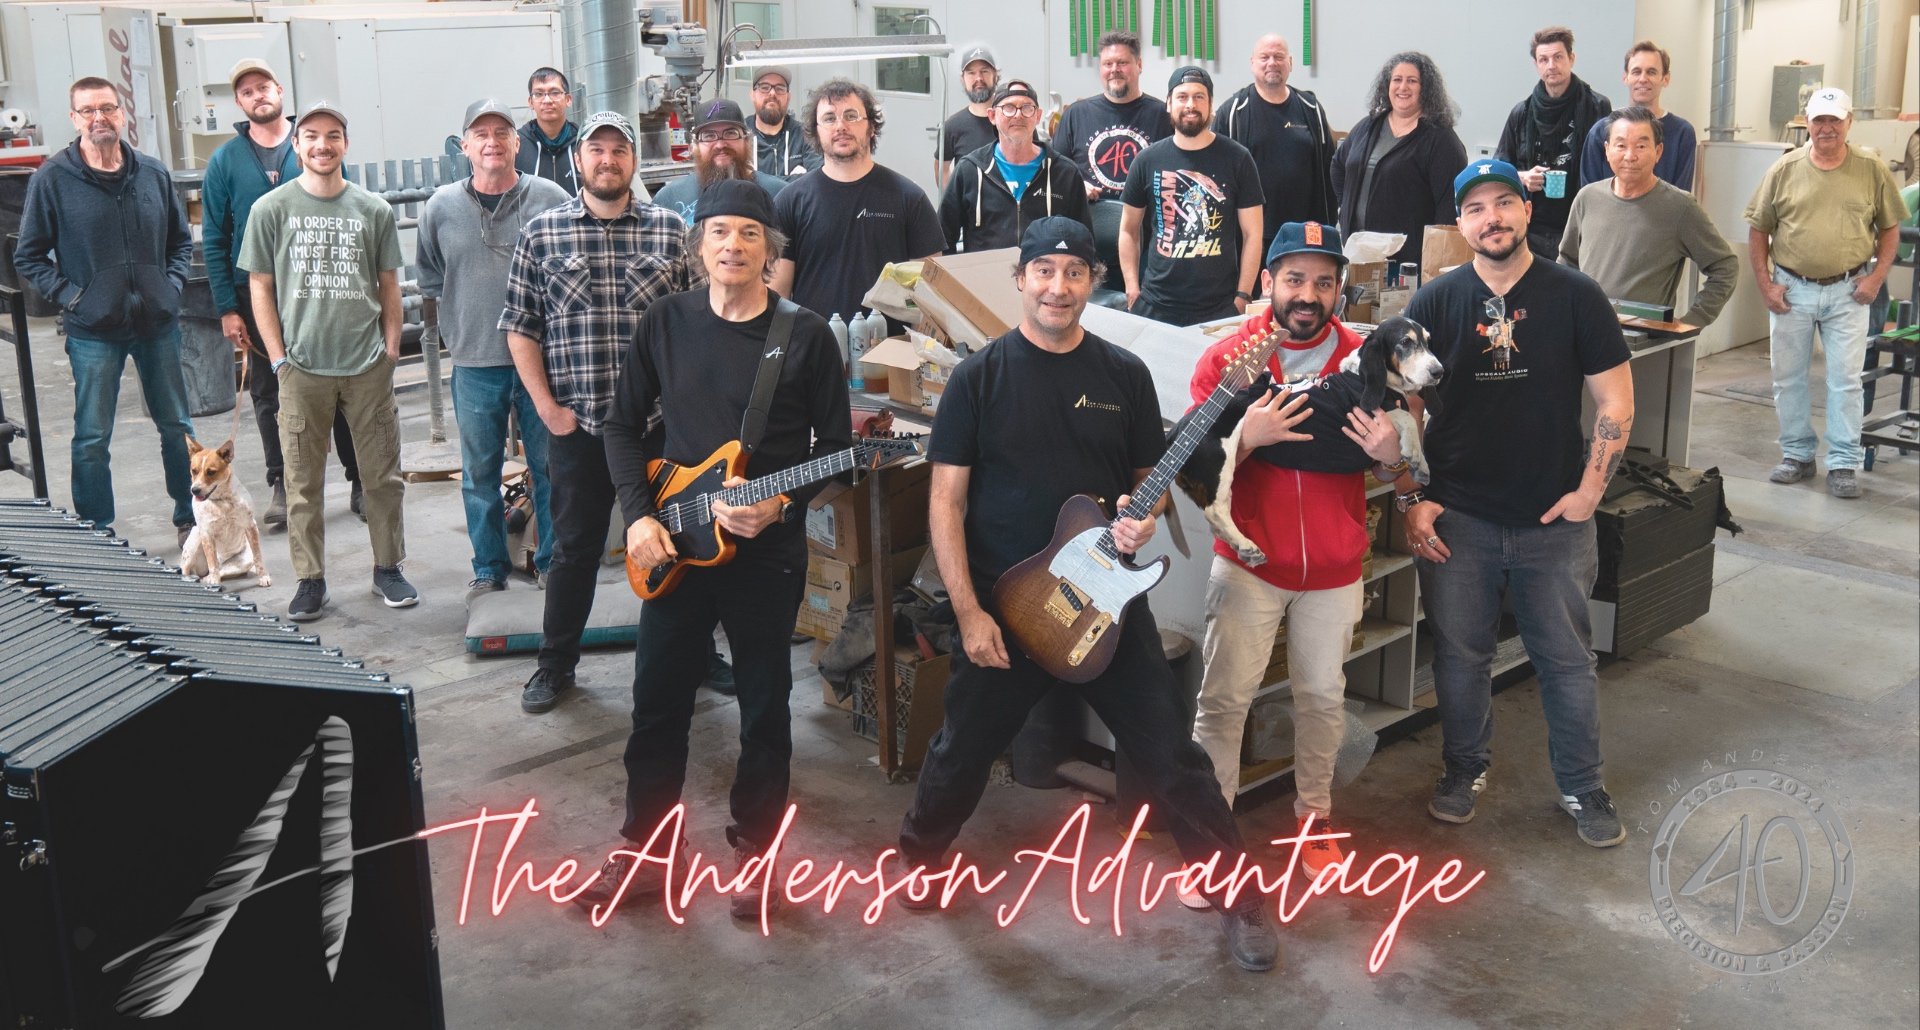 Anderson Guitarworks